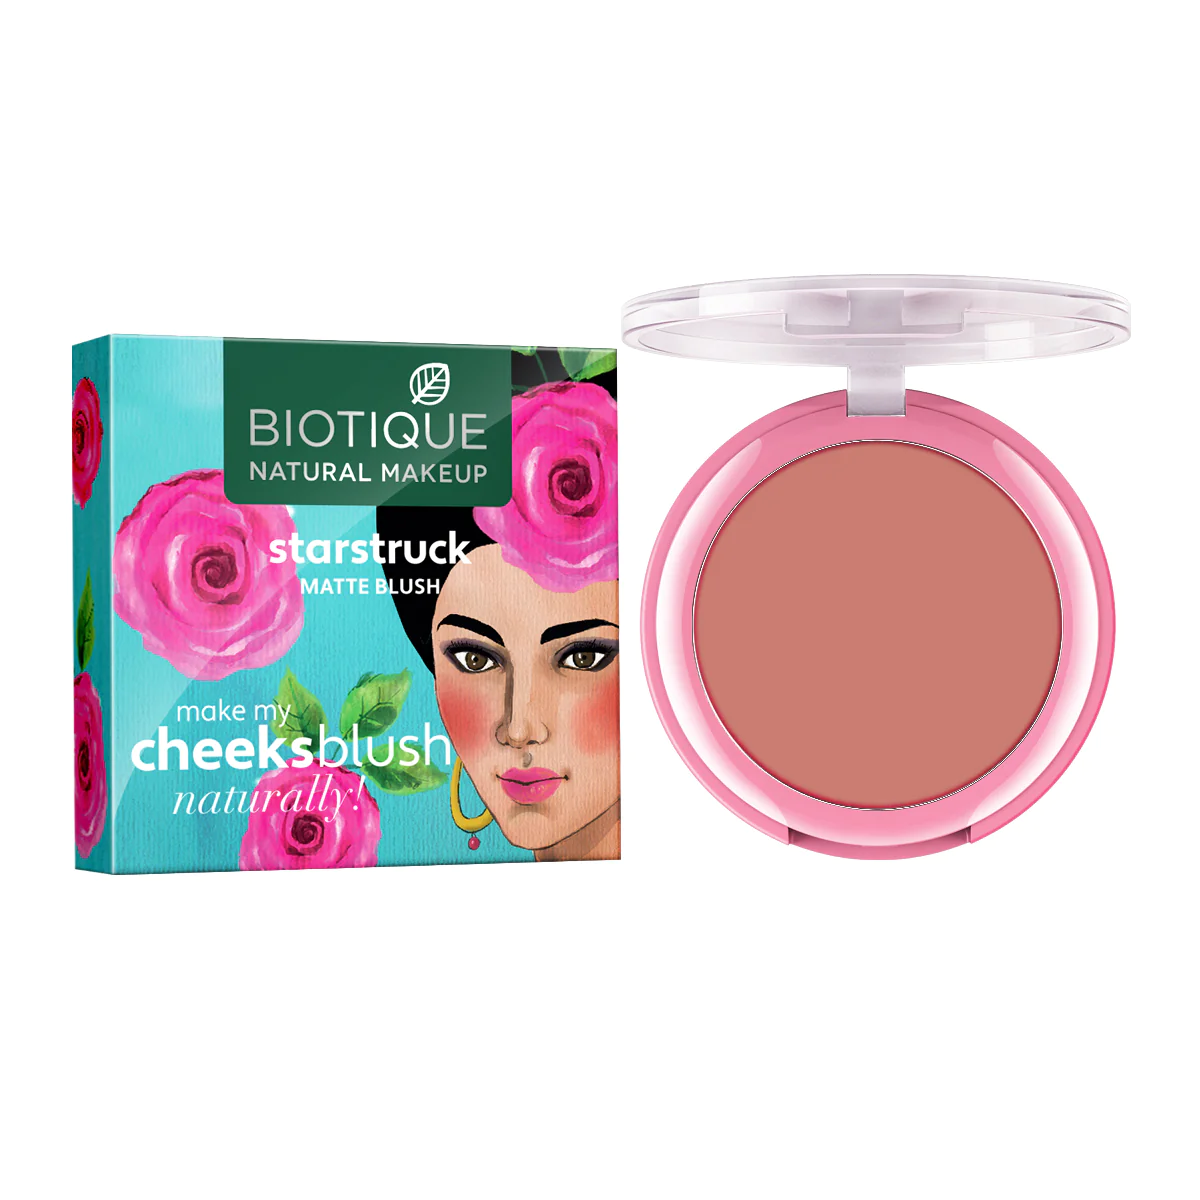 Biotique Natural Makeup Starstruck Matte Blush, Promise In Pink, 6g